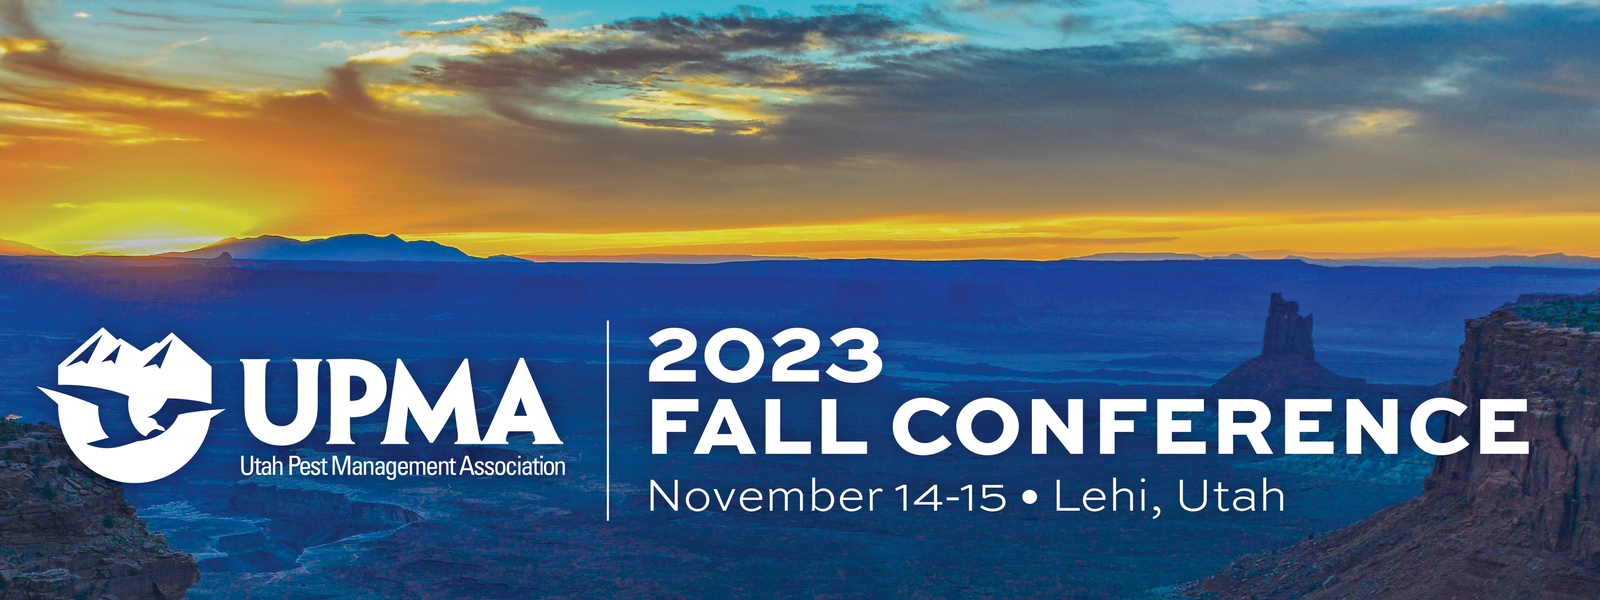 UPMA 2023 Fall Conference